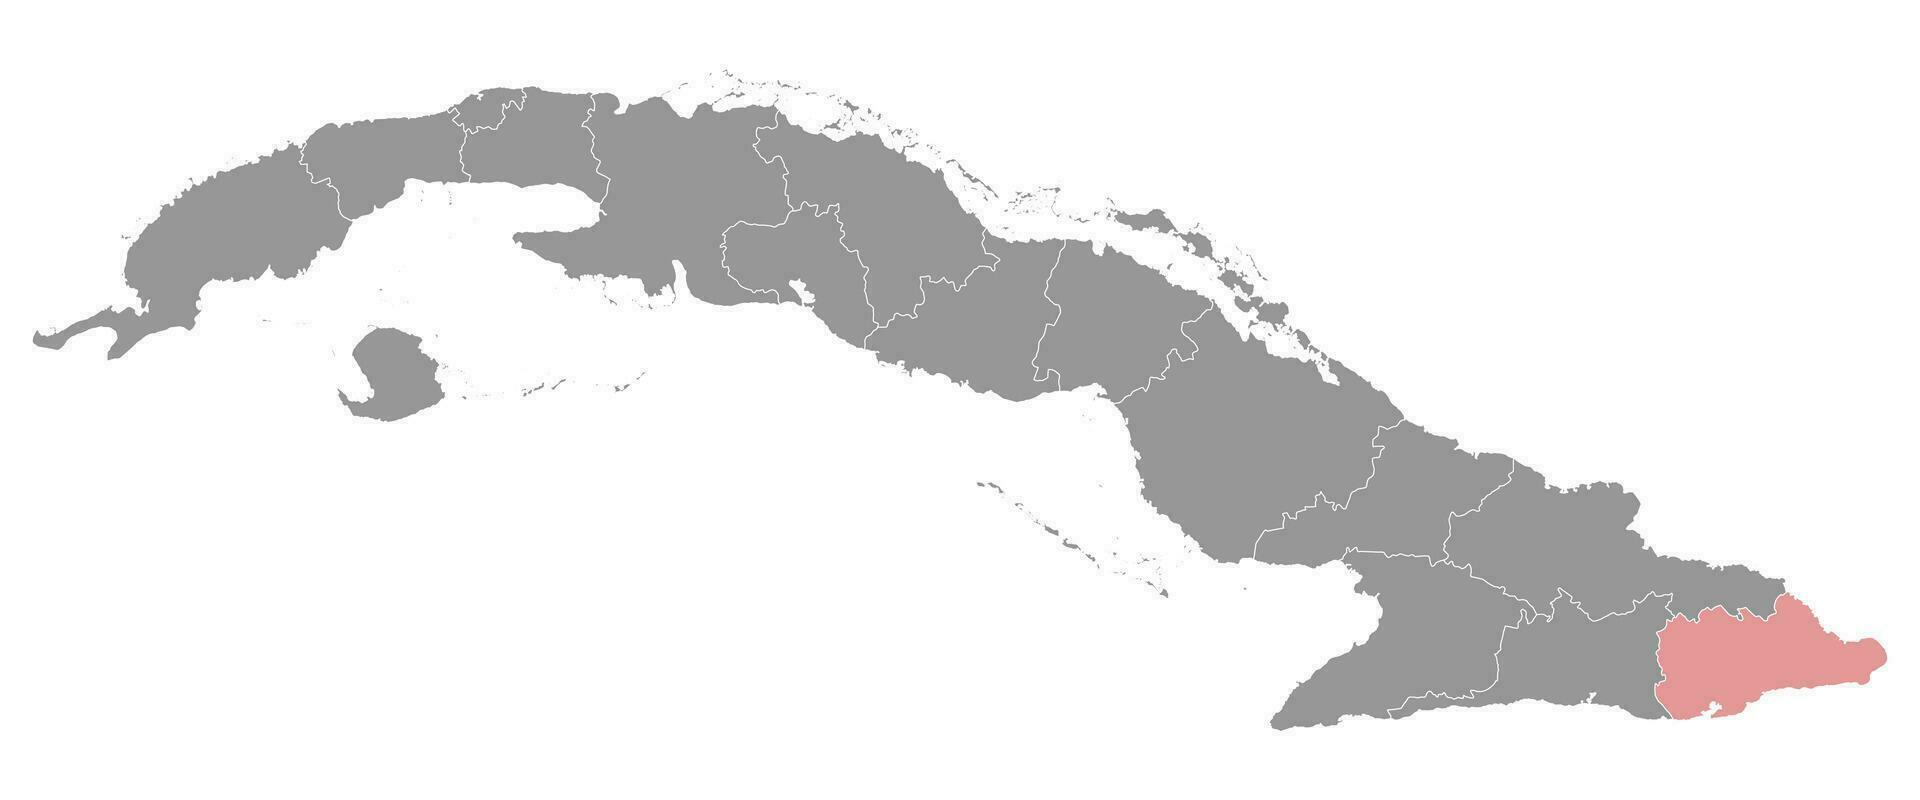 Guantanamo province map, administrative division of Cuba. Vector illustration.